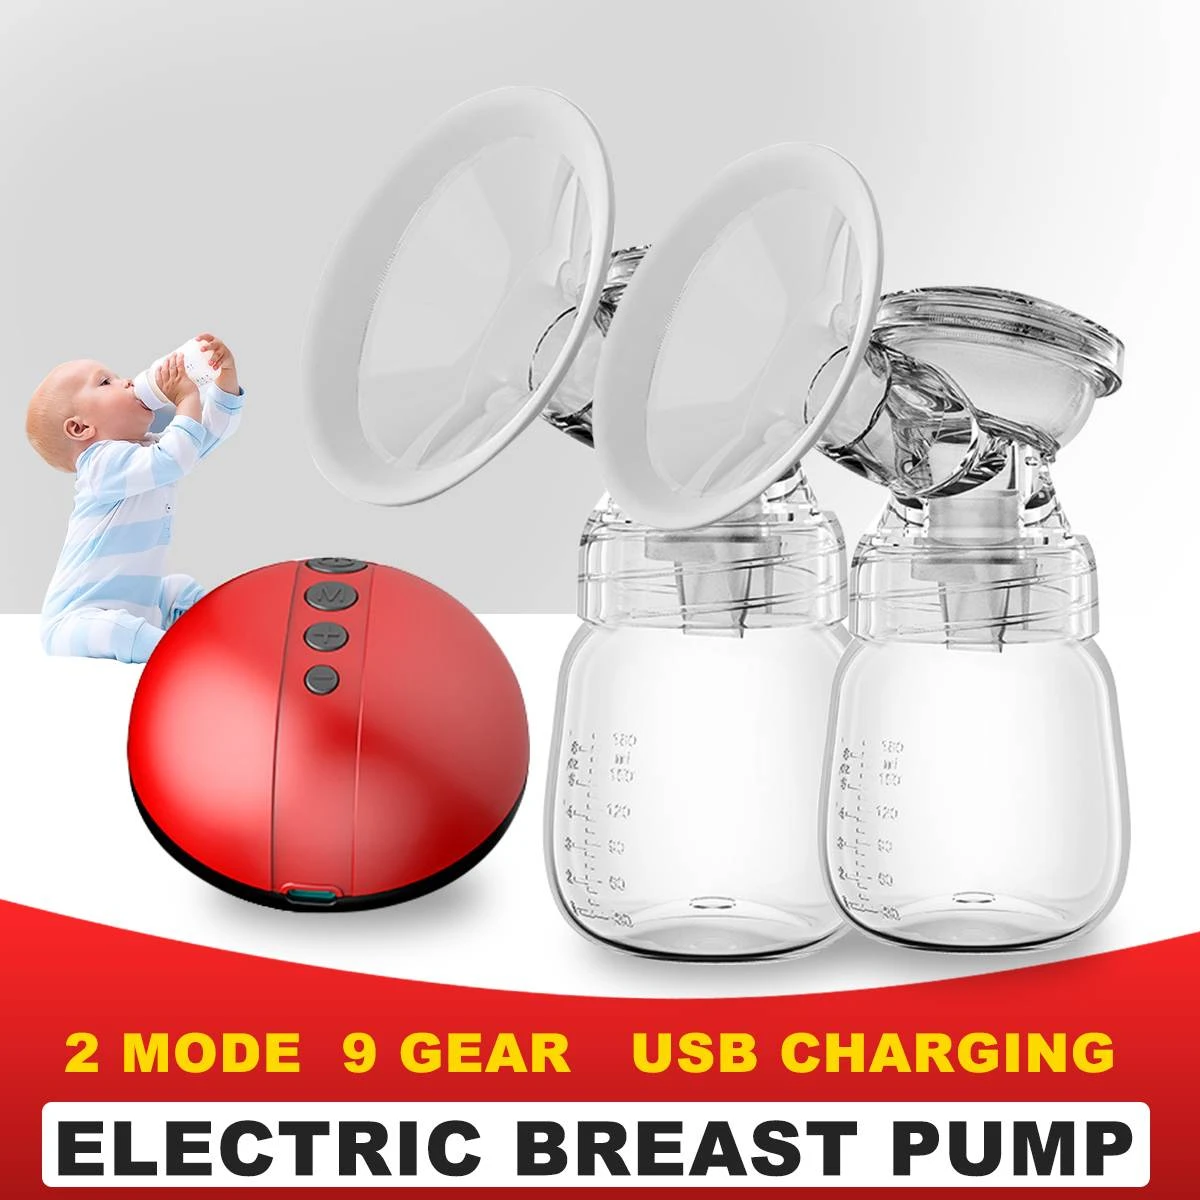 New Split Bilateral Electric Breast Pump Milk Feeding Automatic Massage Postpartum Lactator Pumps Baby Breastfeeding Accessories intelligent rh228 automatic double breast pump